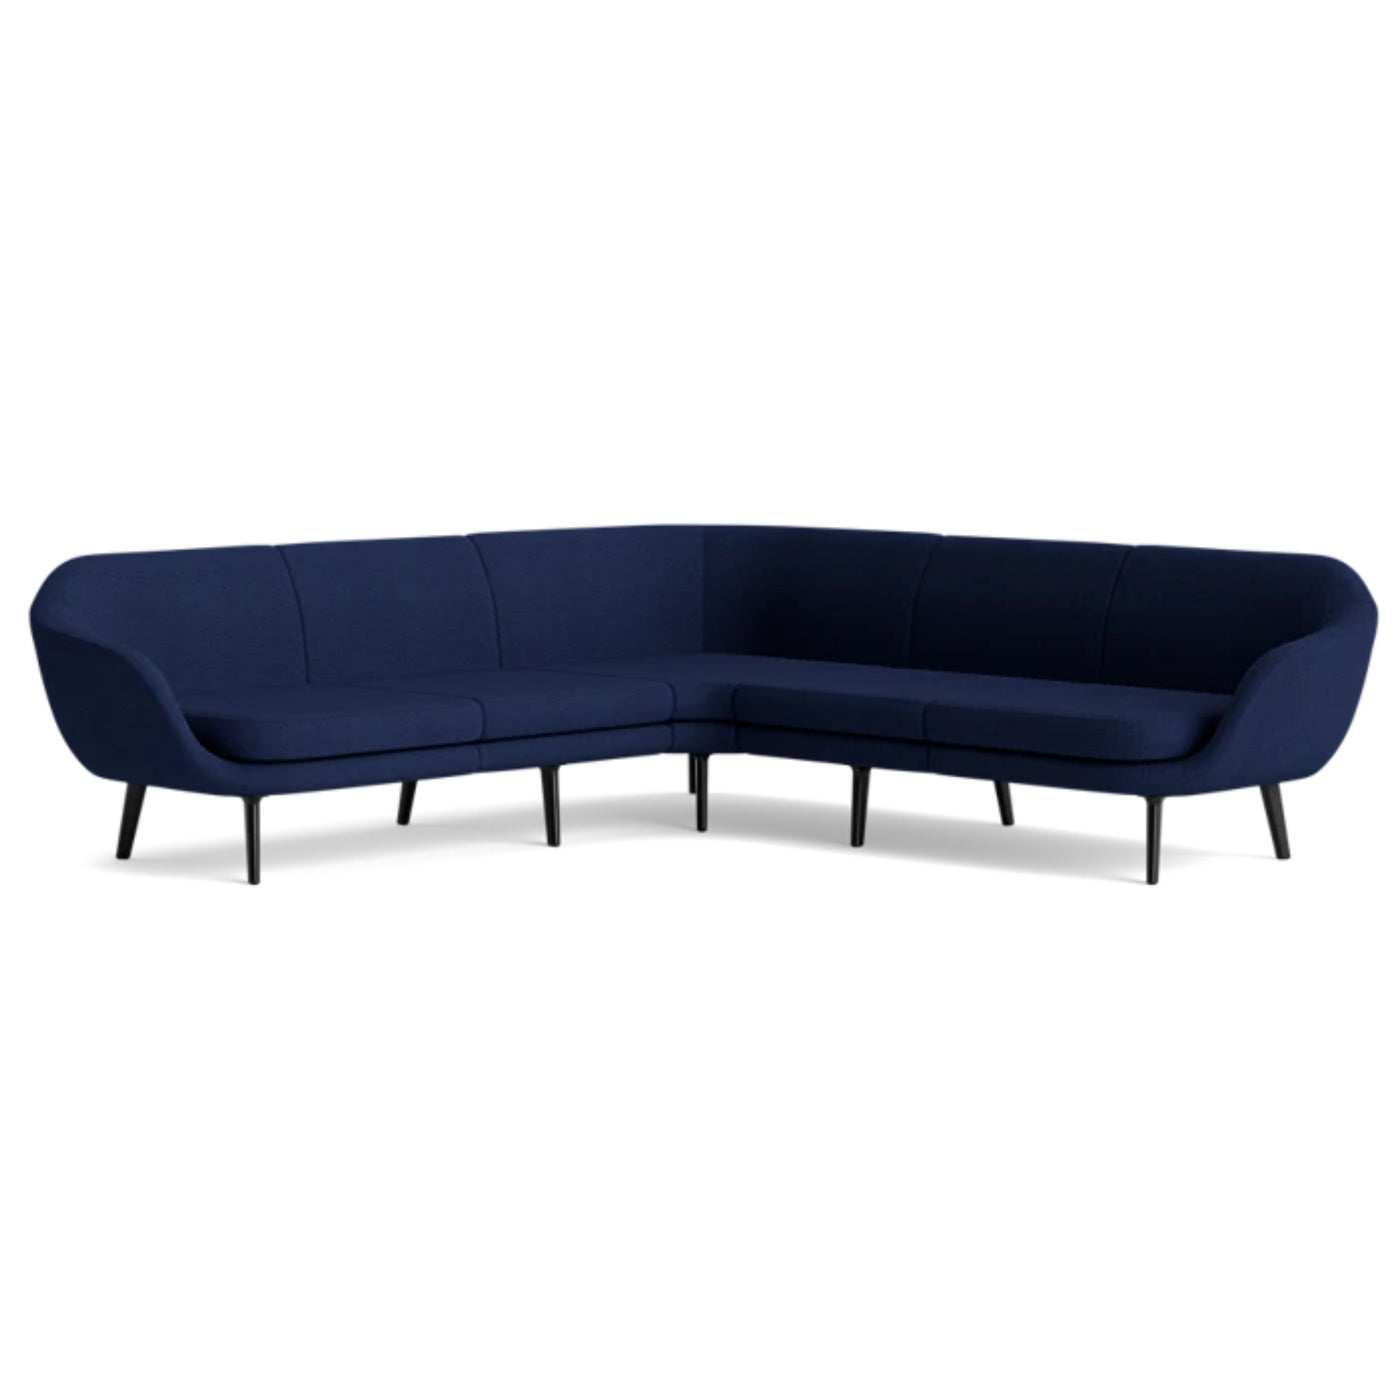 Normann Copenhagen Sum Modular Corner Sofa at someday designs. #colour_hallingdal-764